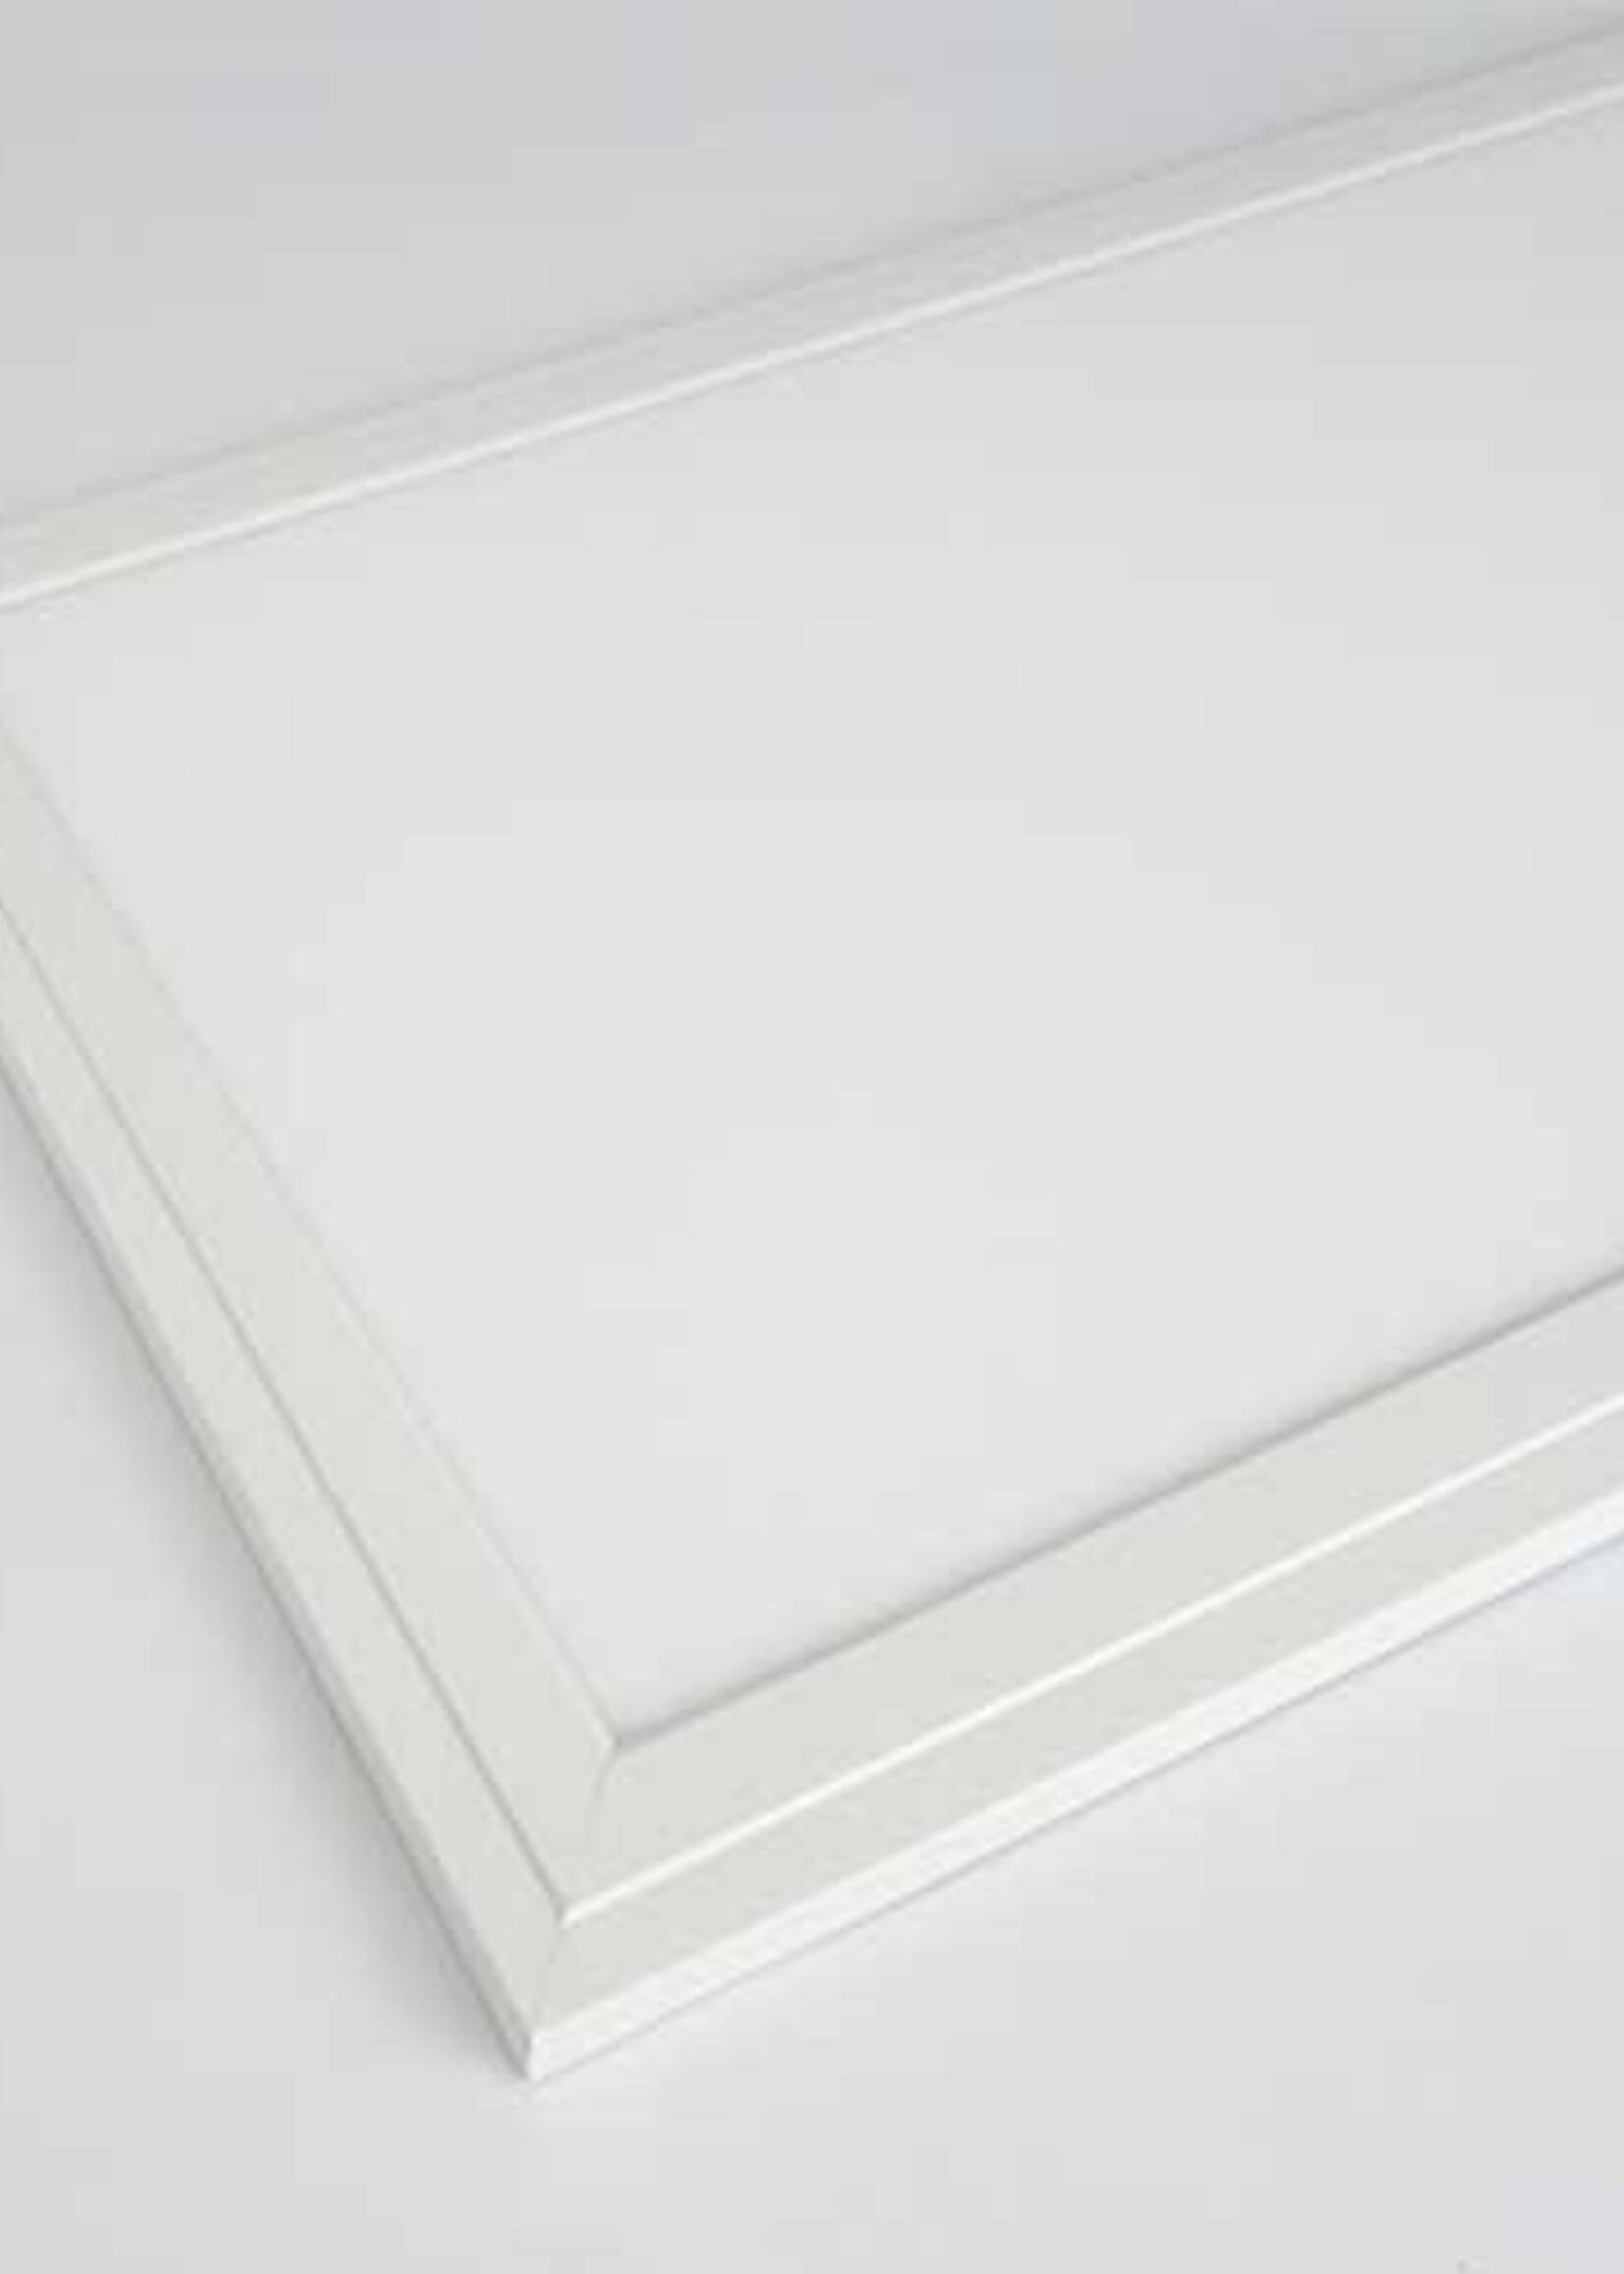 LEDWINKEL-Online LED Panel 30x120cm UGR<19 36W 110lm/W Back-lit